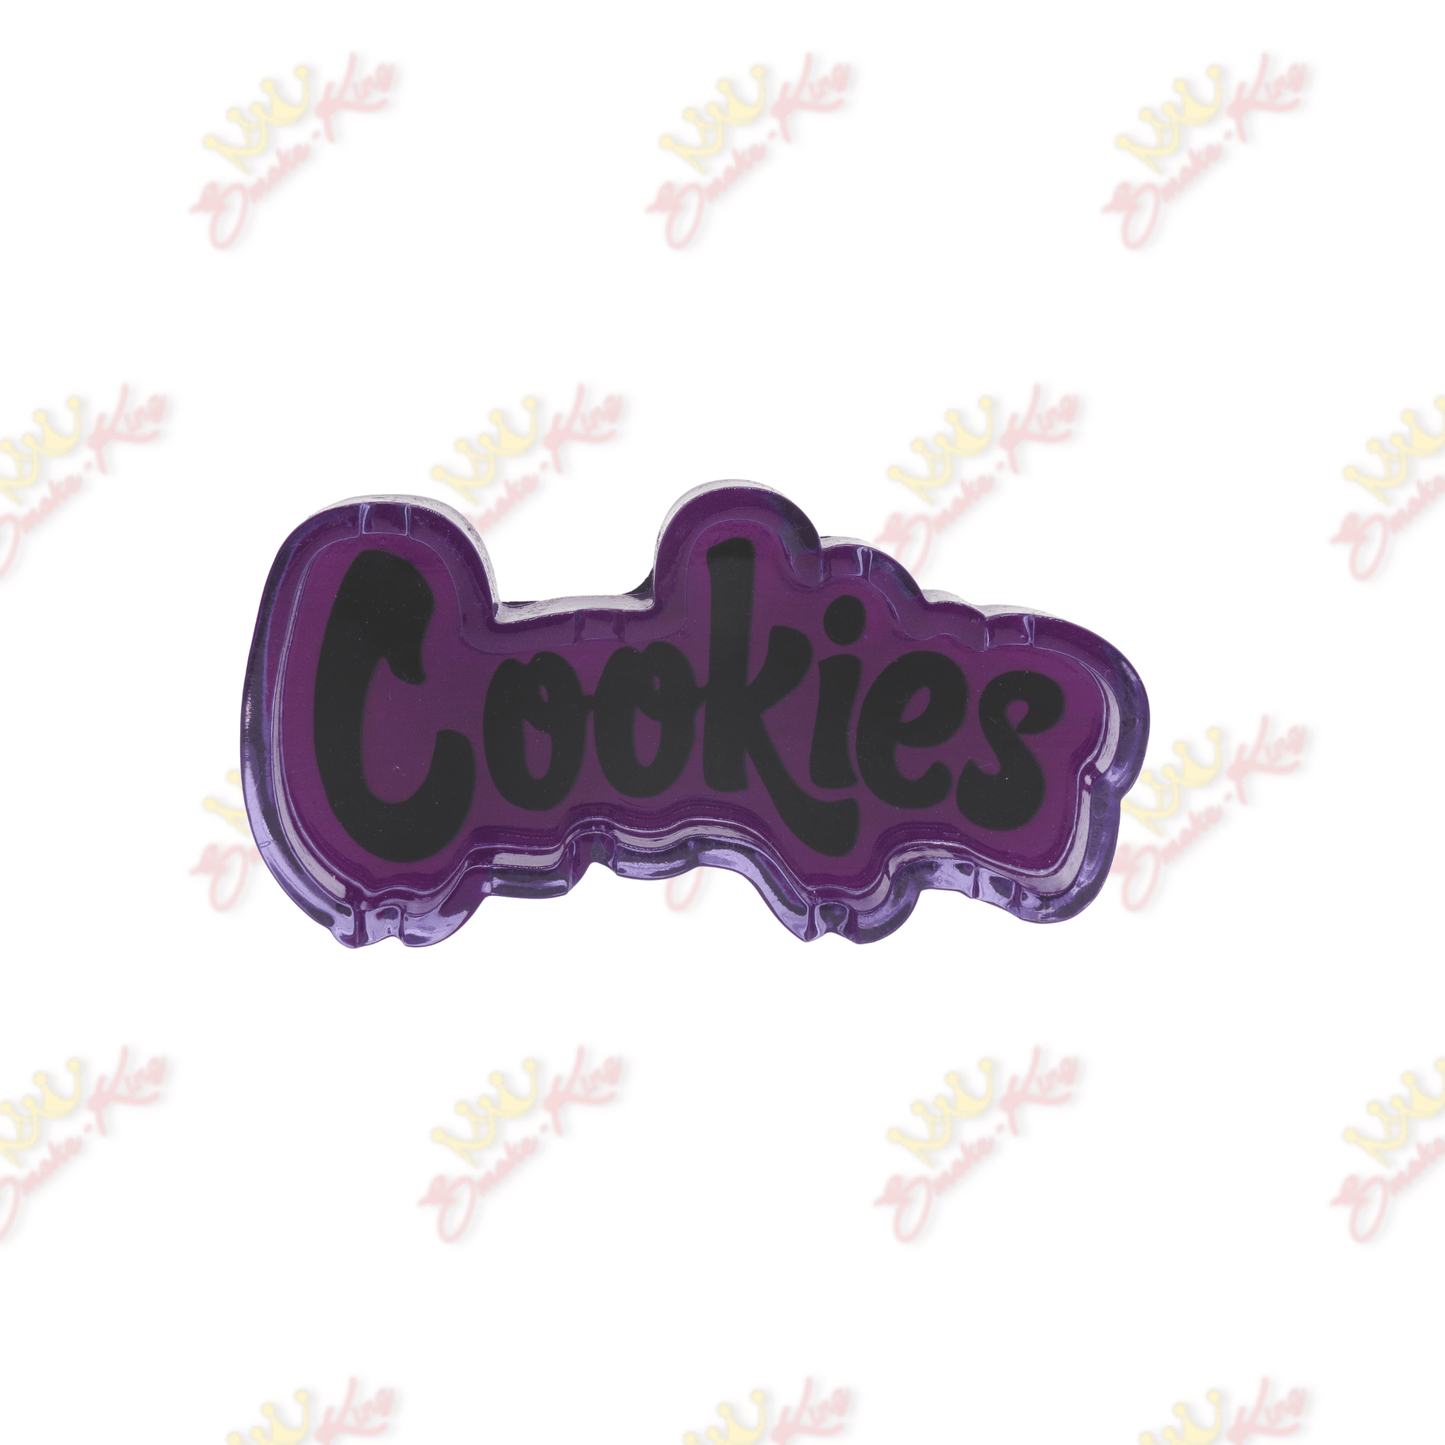 Purple cookies Ash Tray